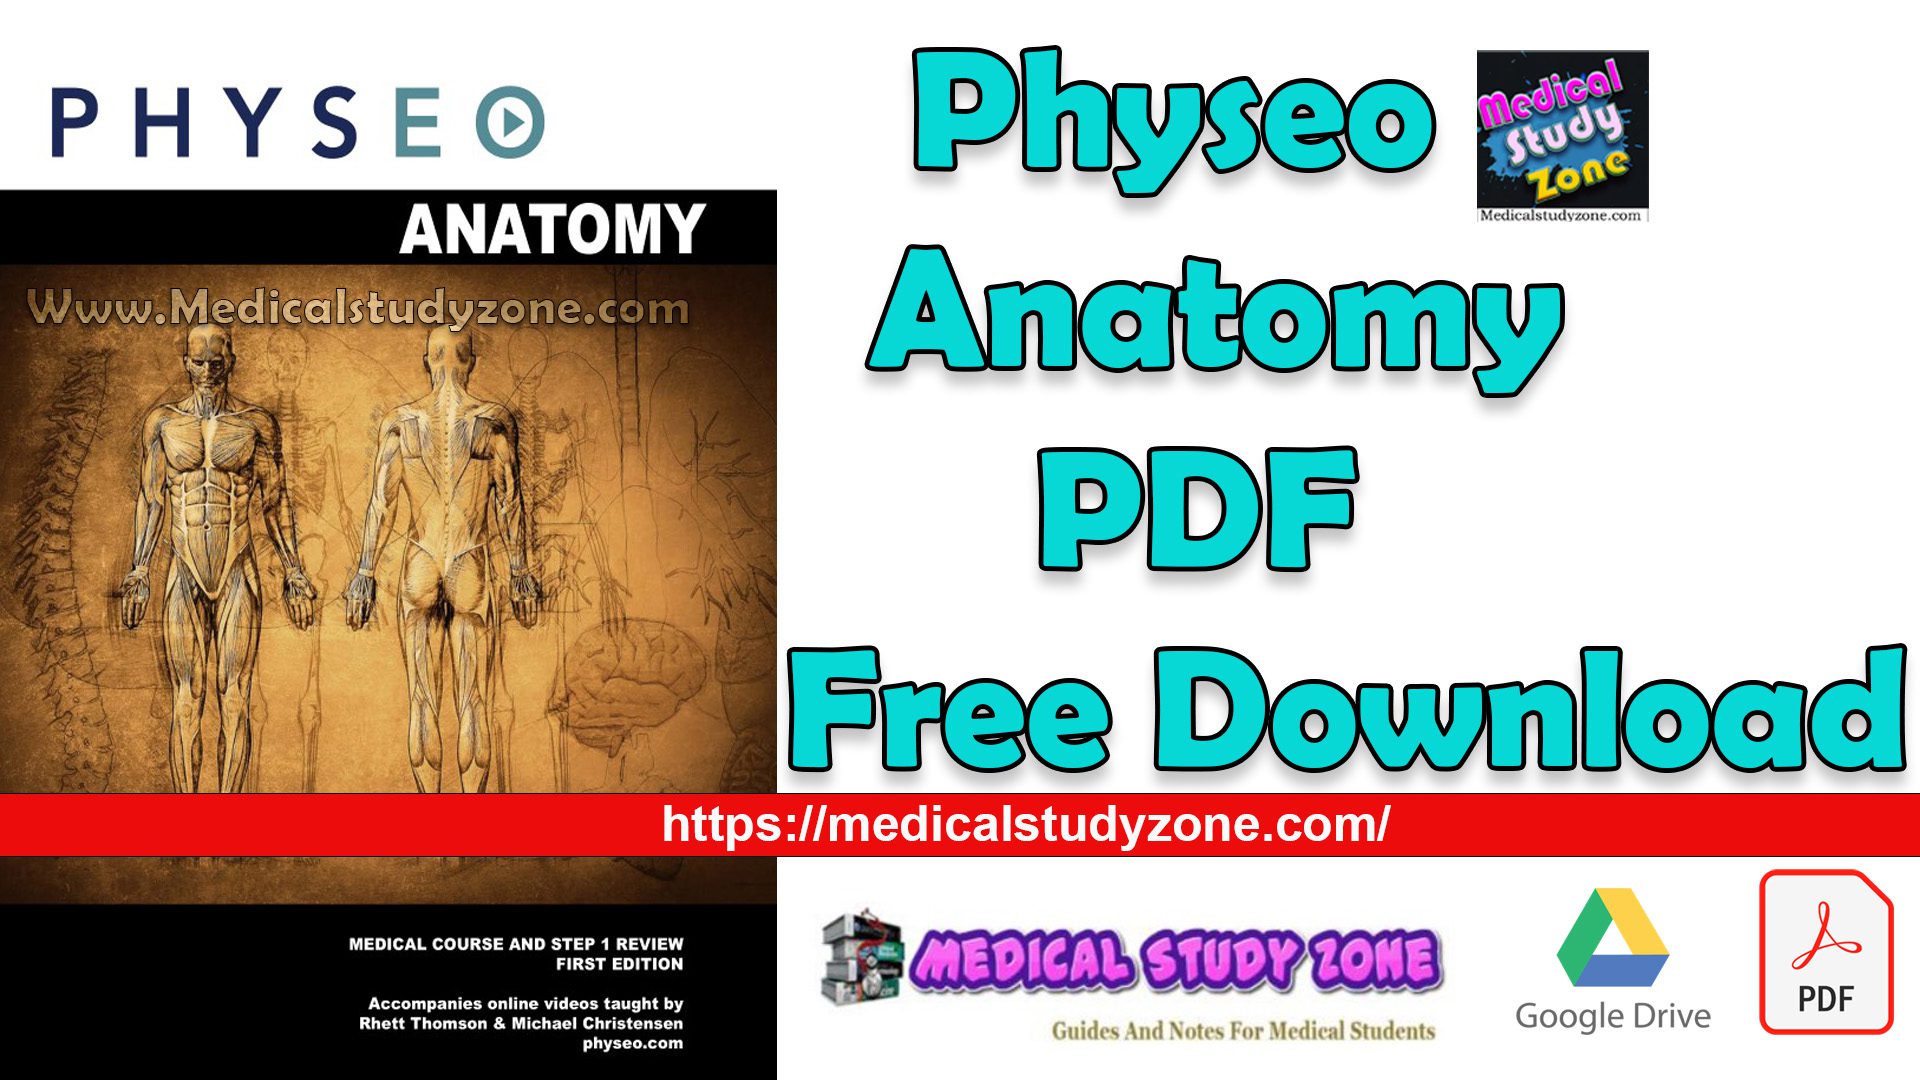 Physeo Anatomy PDF Free Download